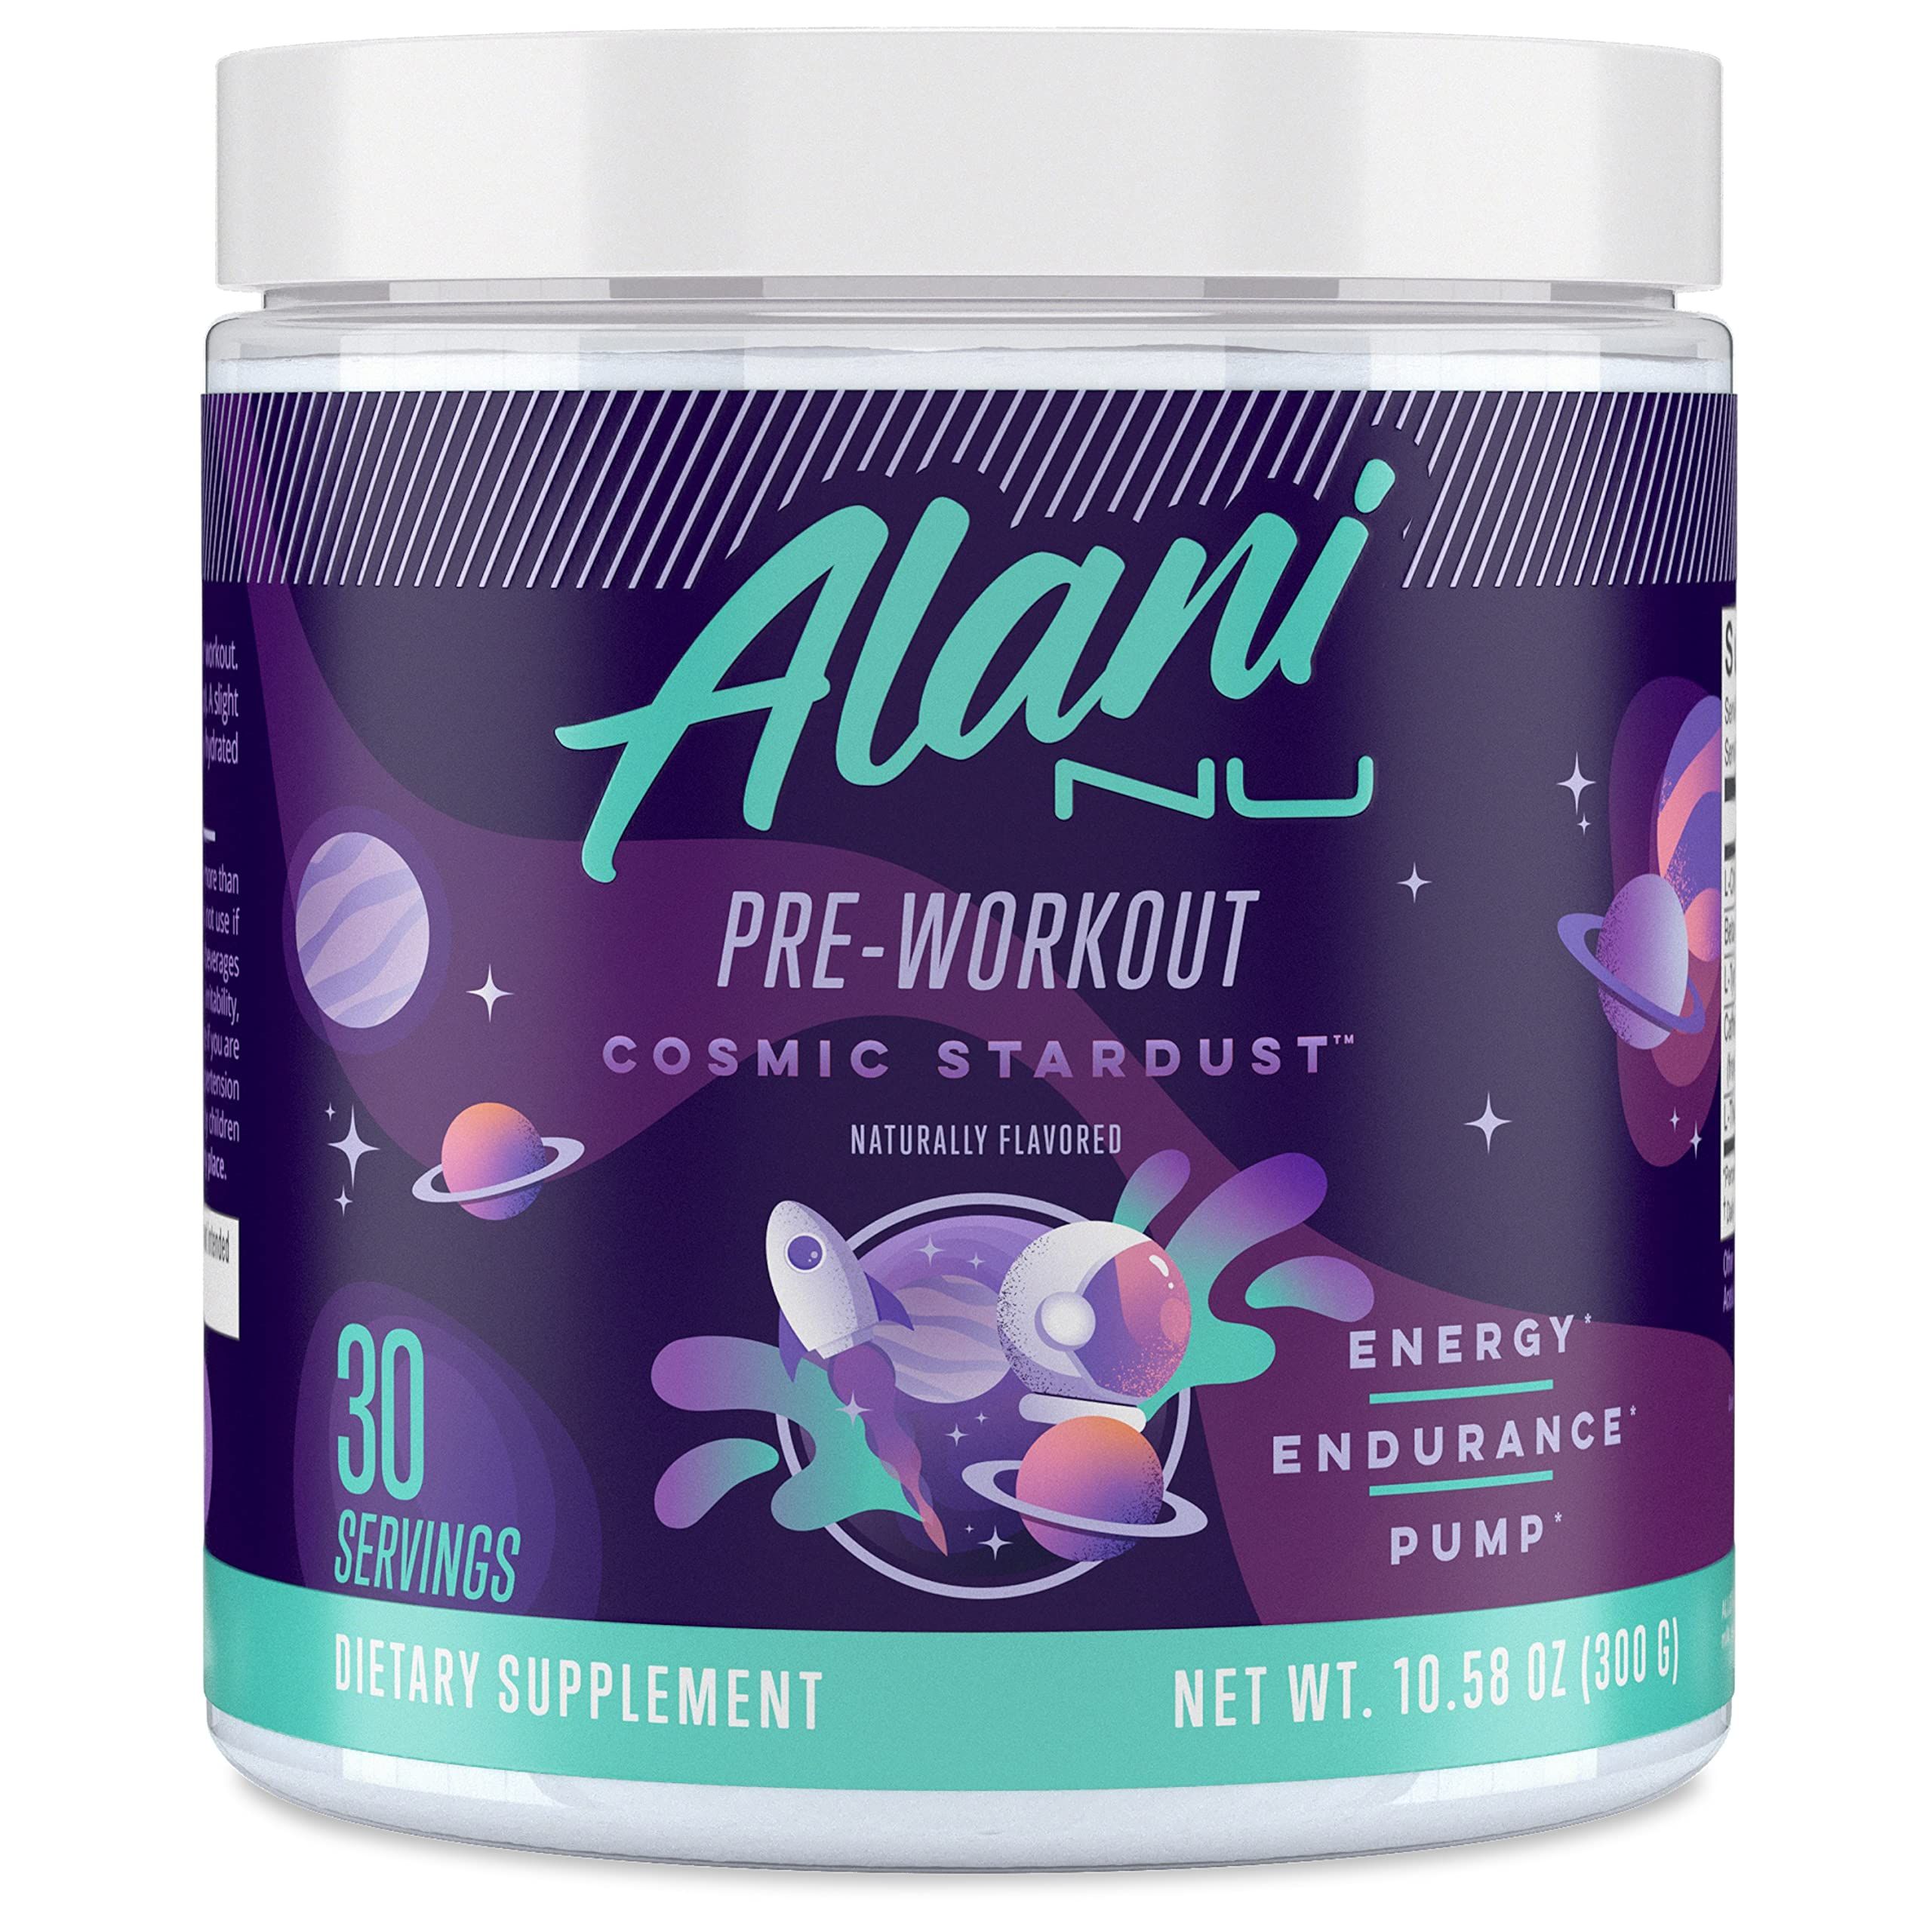 Alani Nu Pre-Workout Supplement Powder for Energy, Endurance, and Pump, Cosmic Stardust, 30 Servi... | Amazon (US)